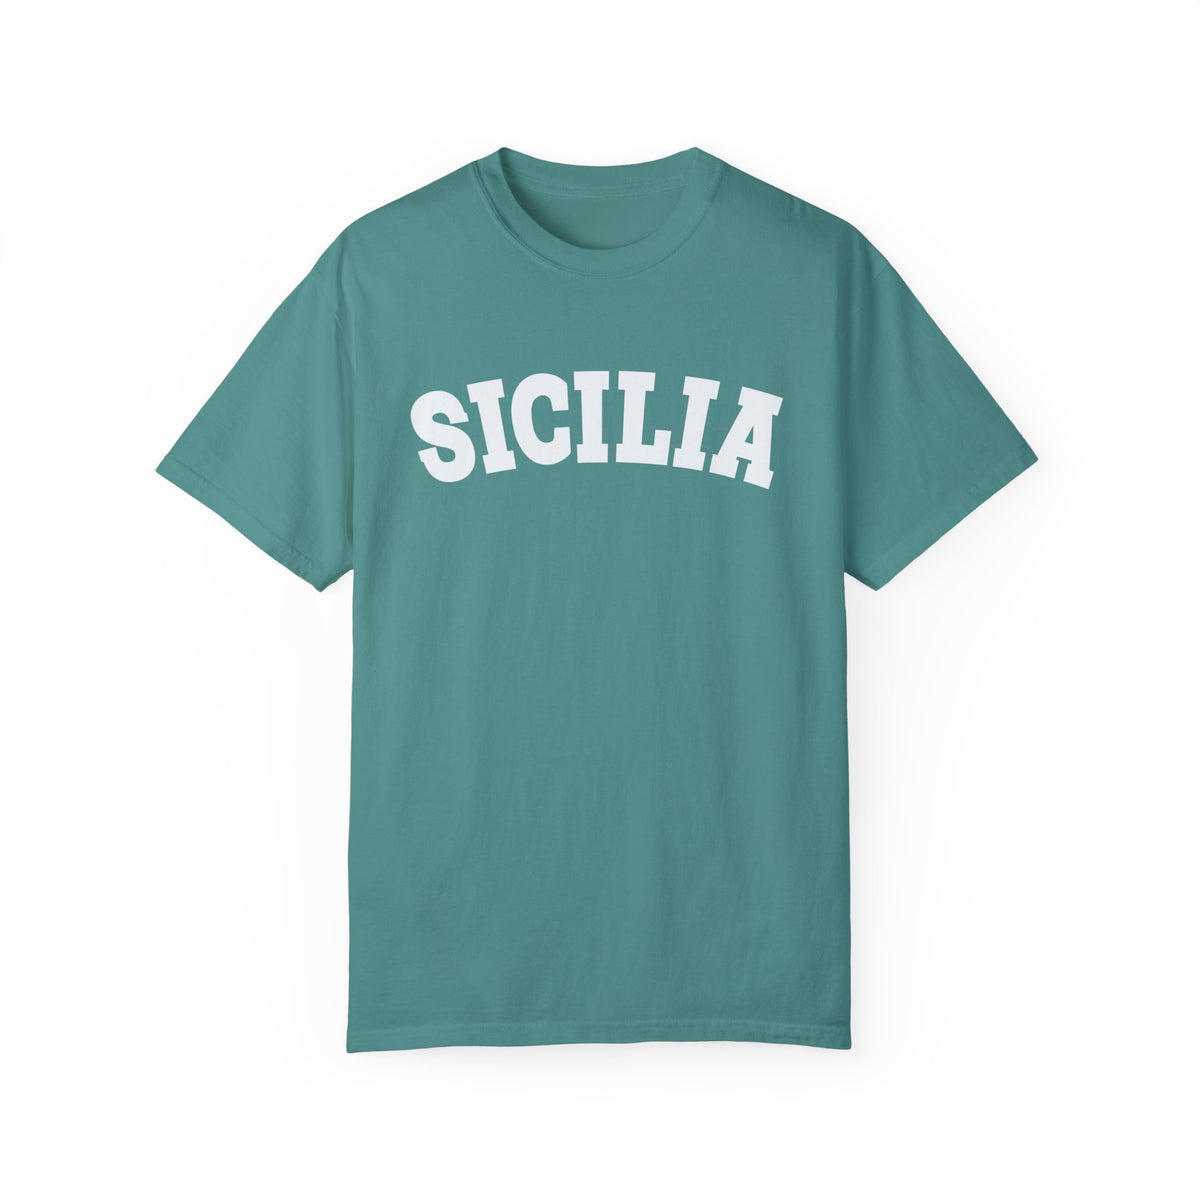 Sicilia College Style Italian Shirt | Sicily Italy Italian Gift | Unisex Garment-Dyed T-shirt